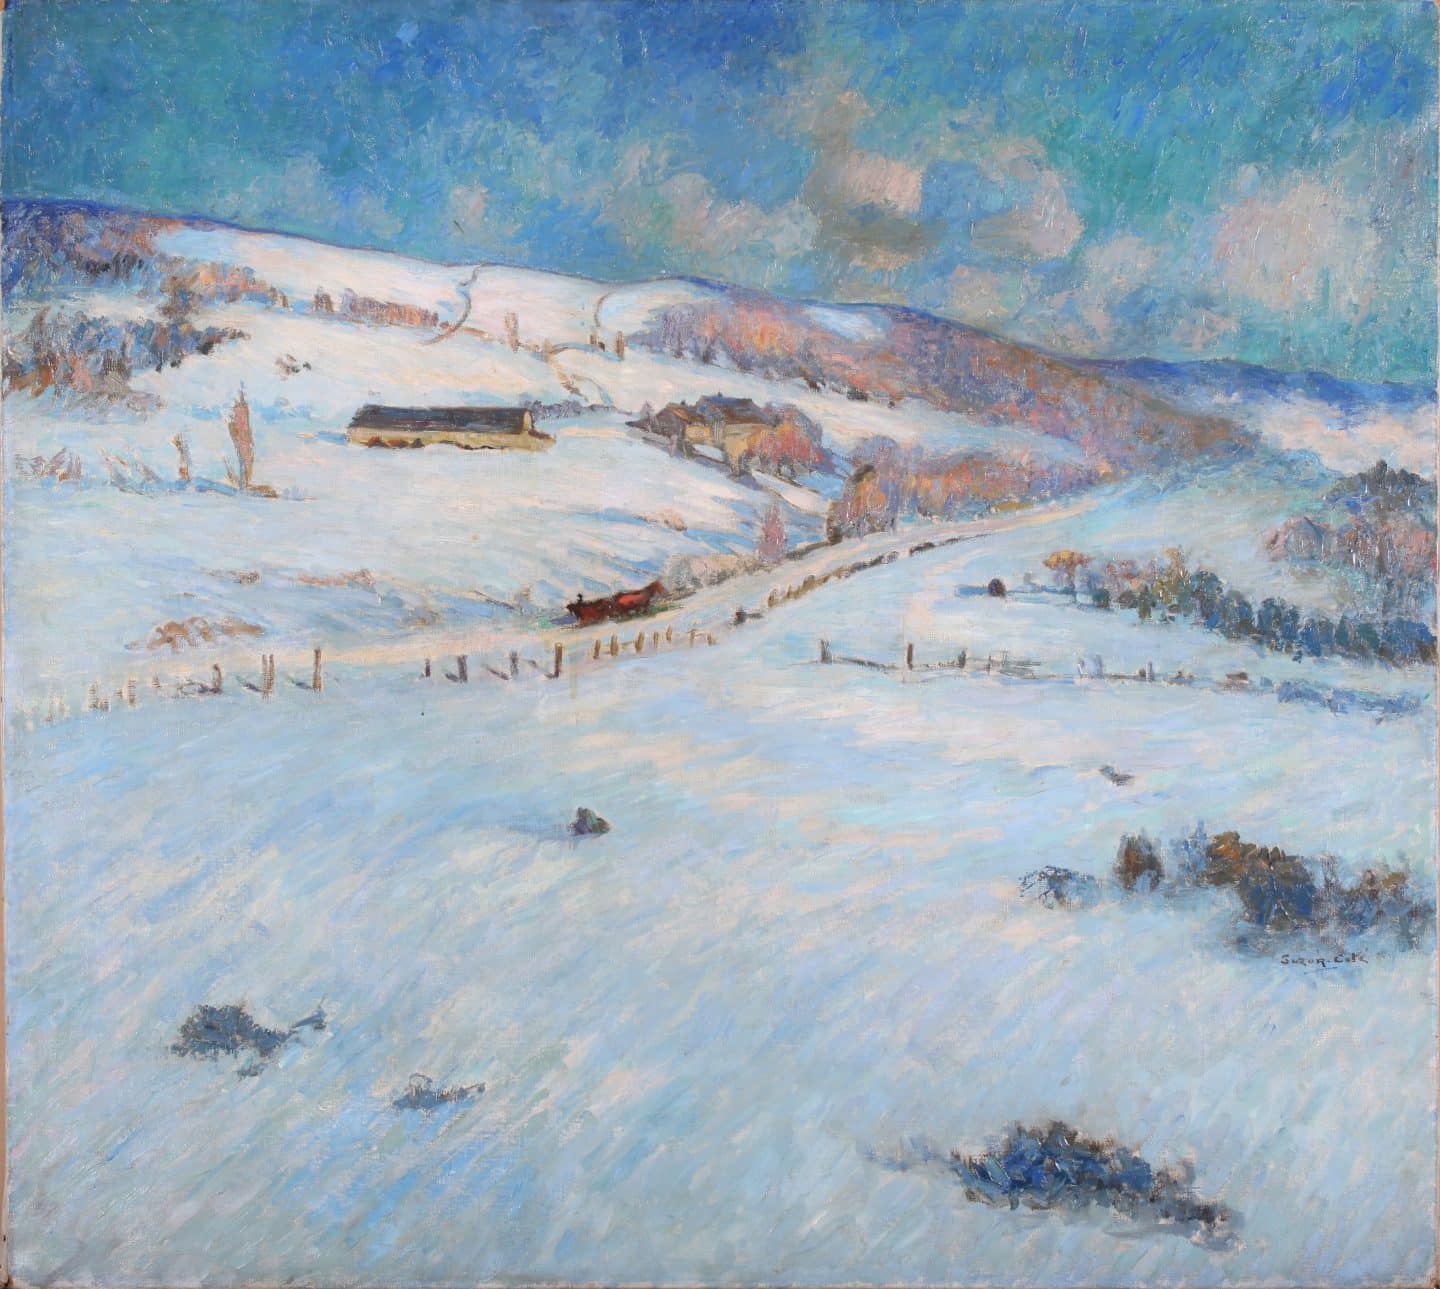 Image : Marc-Aurèle de Foy Suzor-Coté, Wet Snow, Arthabaska, around 1919, oil on canvas. Gift of Mrs Ruth Soloway, 2012 (55-004.45) Photo: Bernard Clark